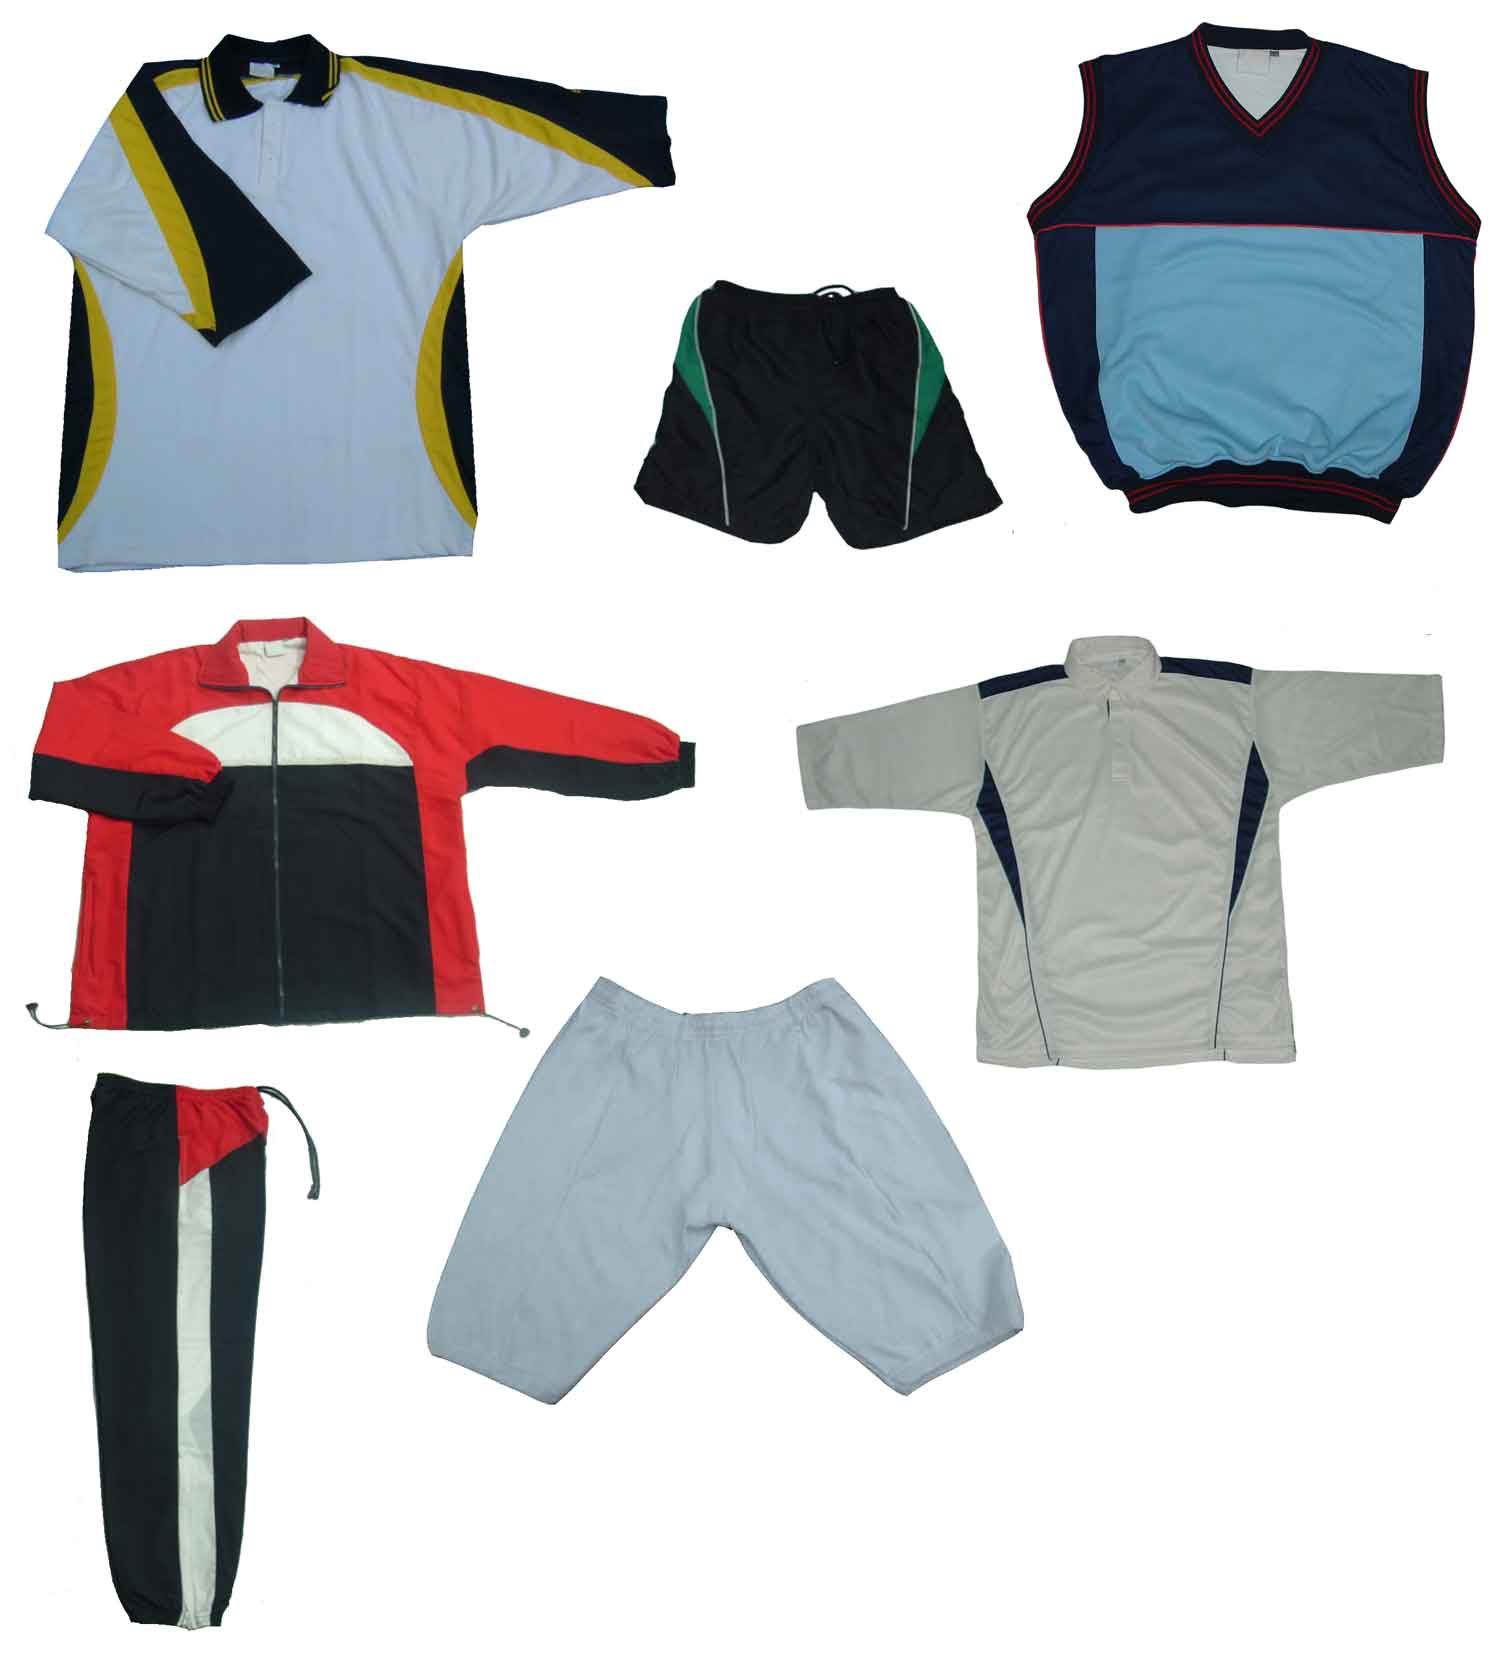 Cricket Garments